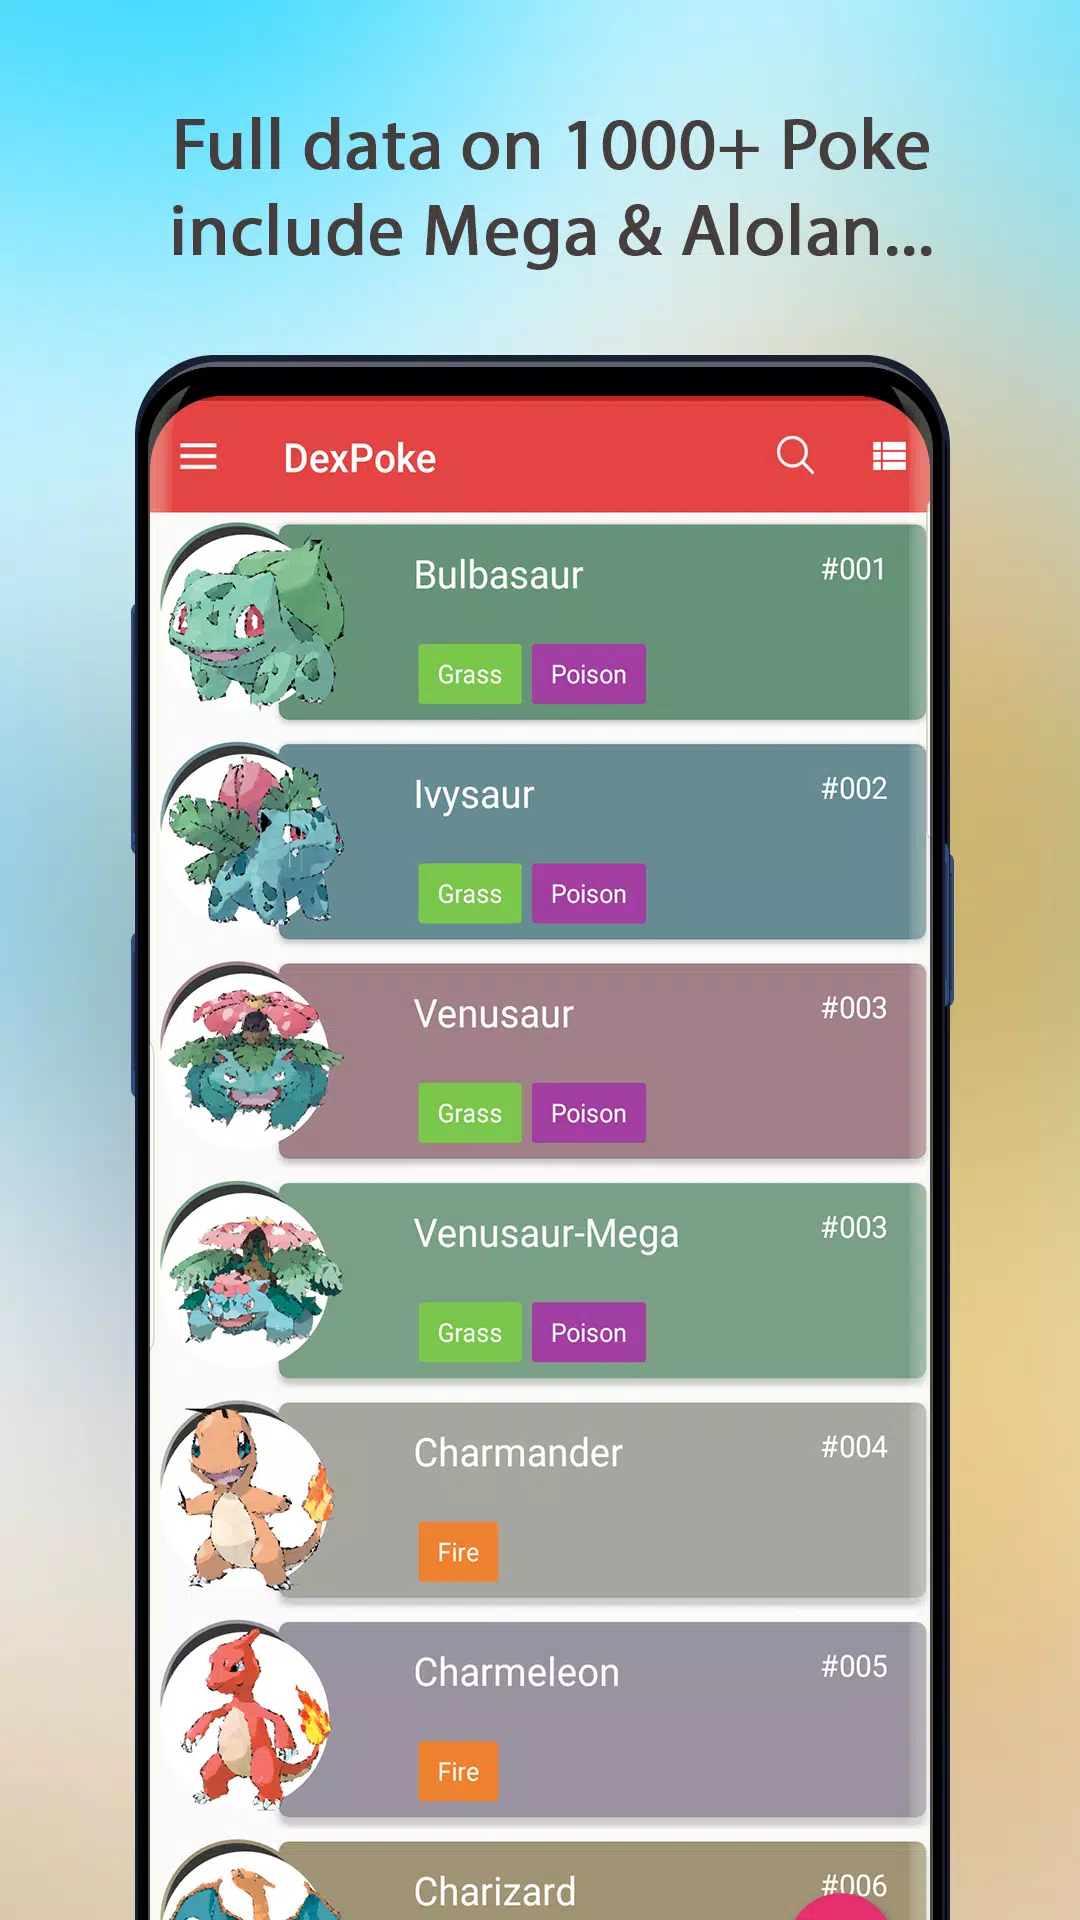 Lista de pokemon - Pokedex APK for Android Download